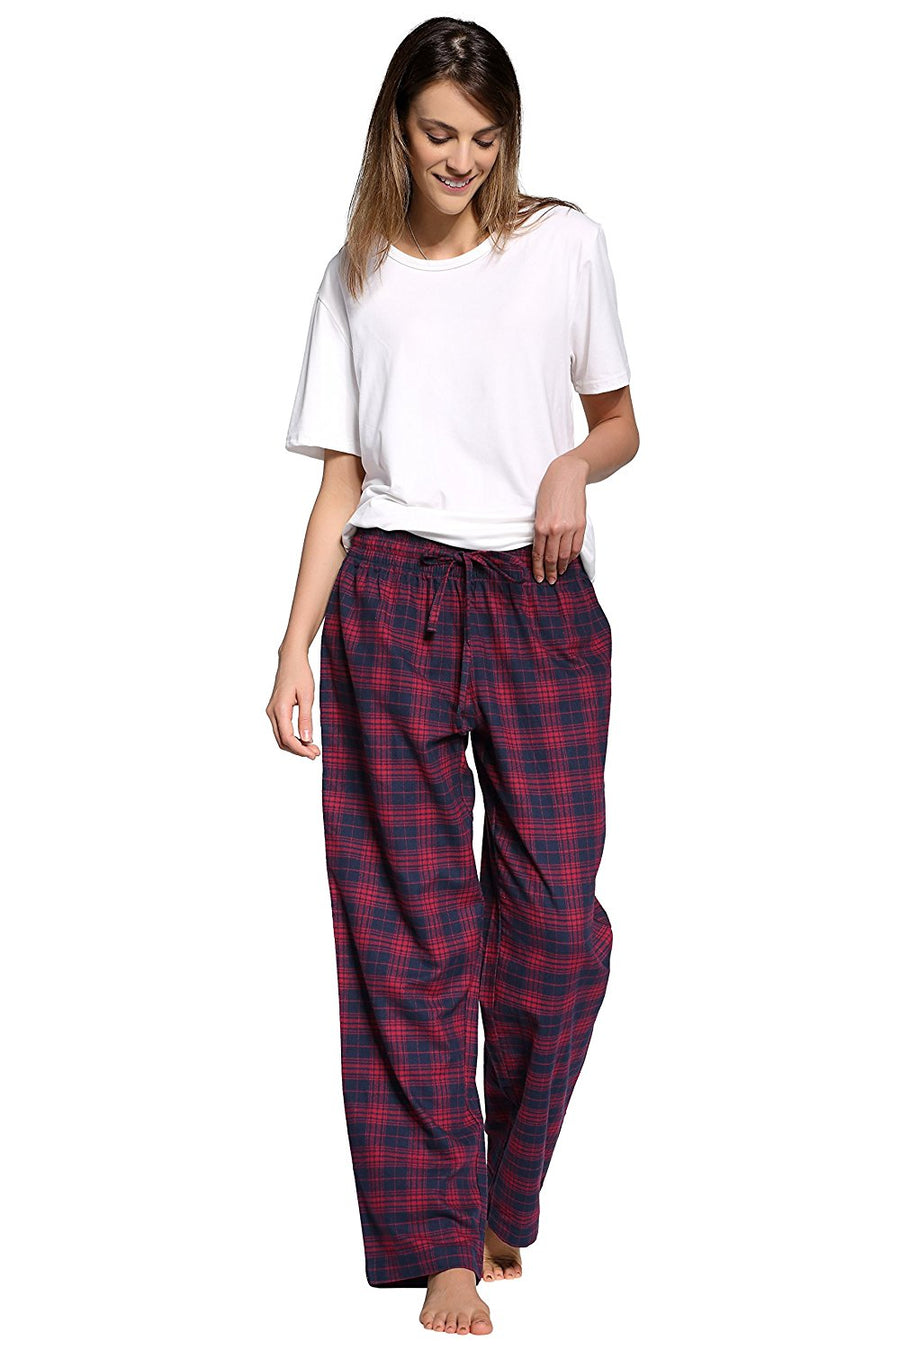 Women's Plaid Cotton Pajamas Pants